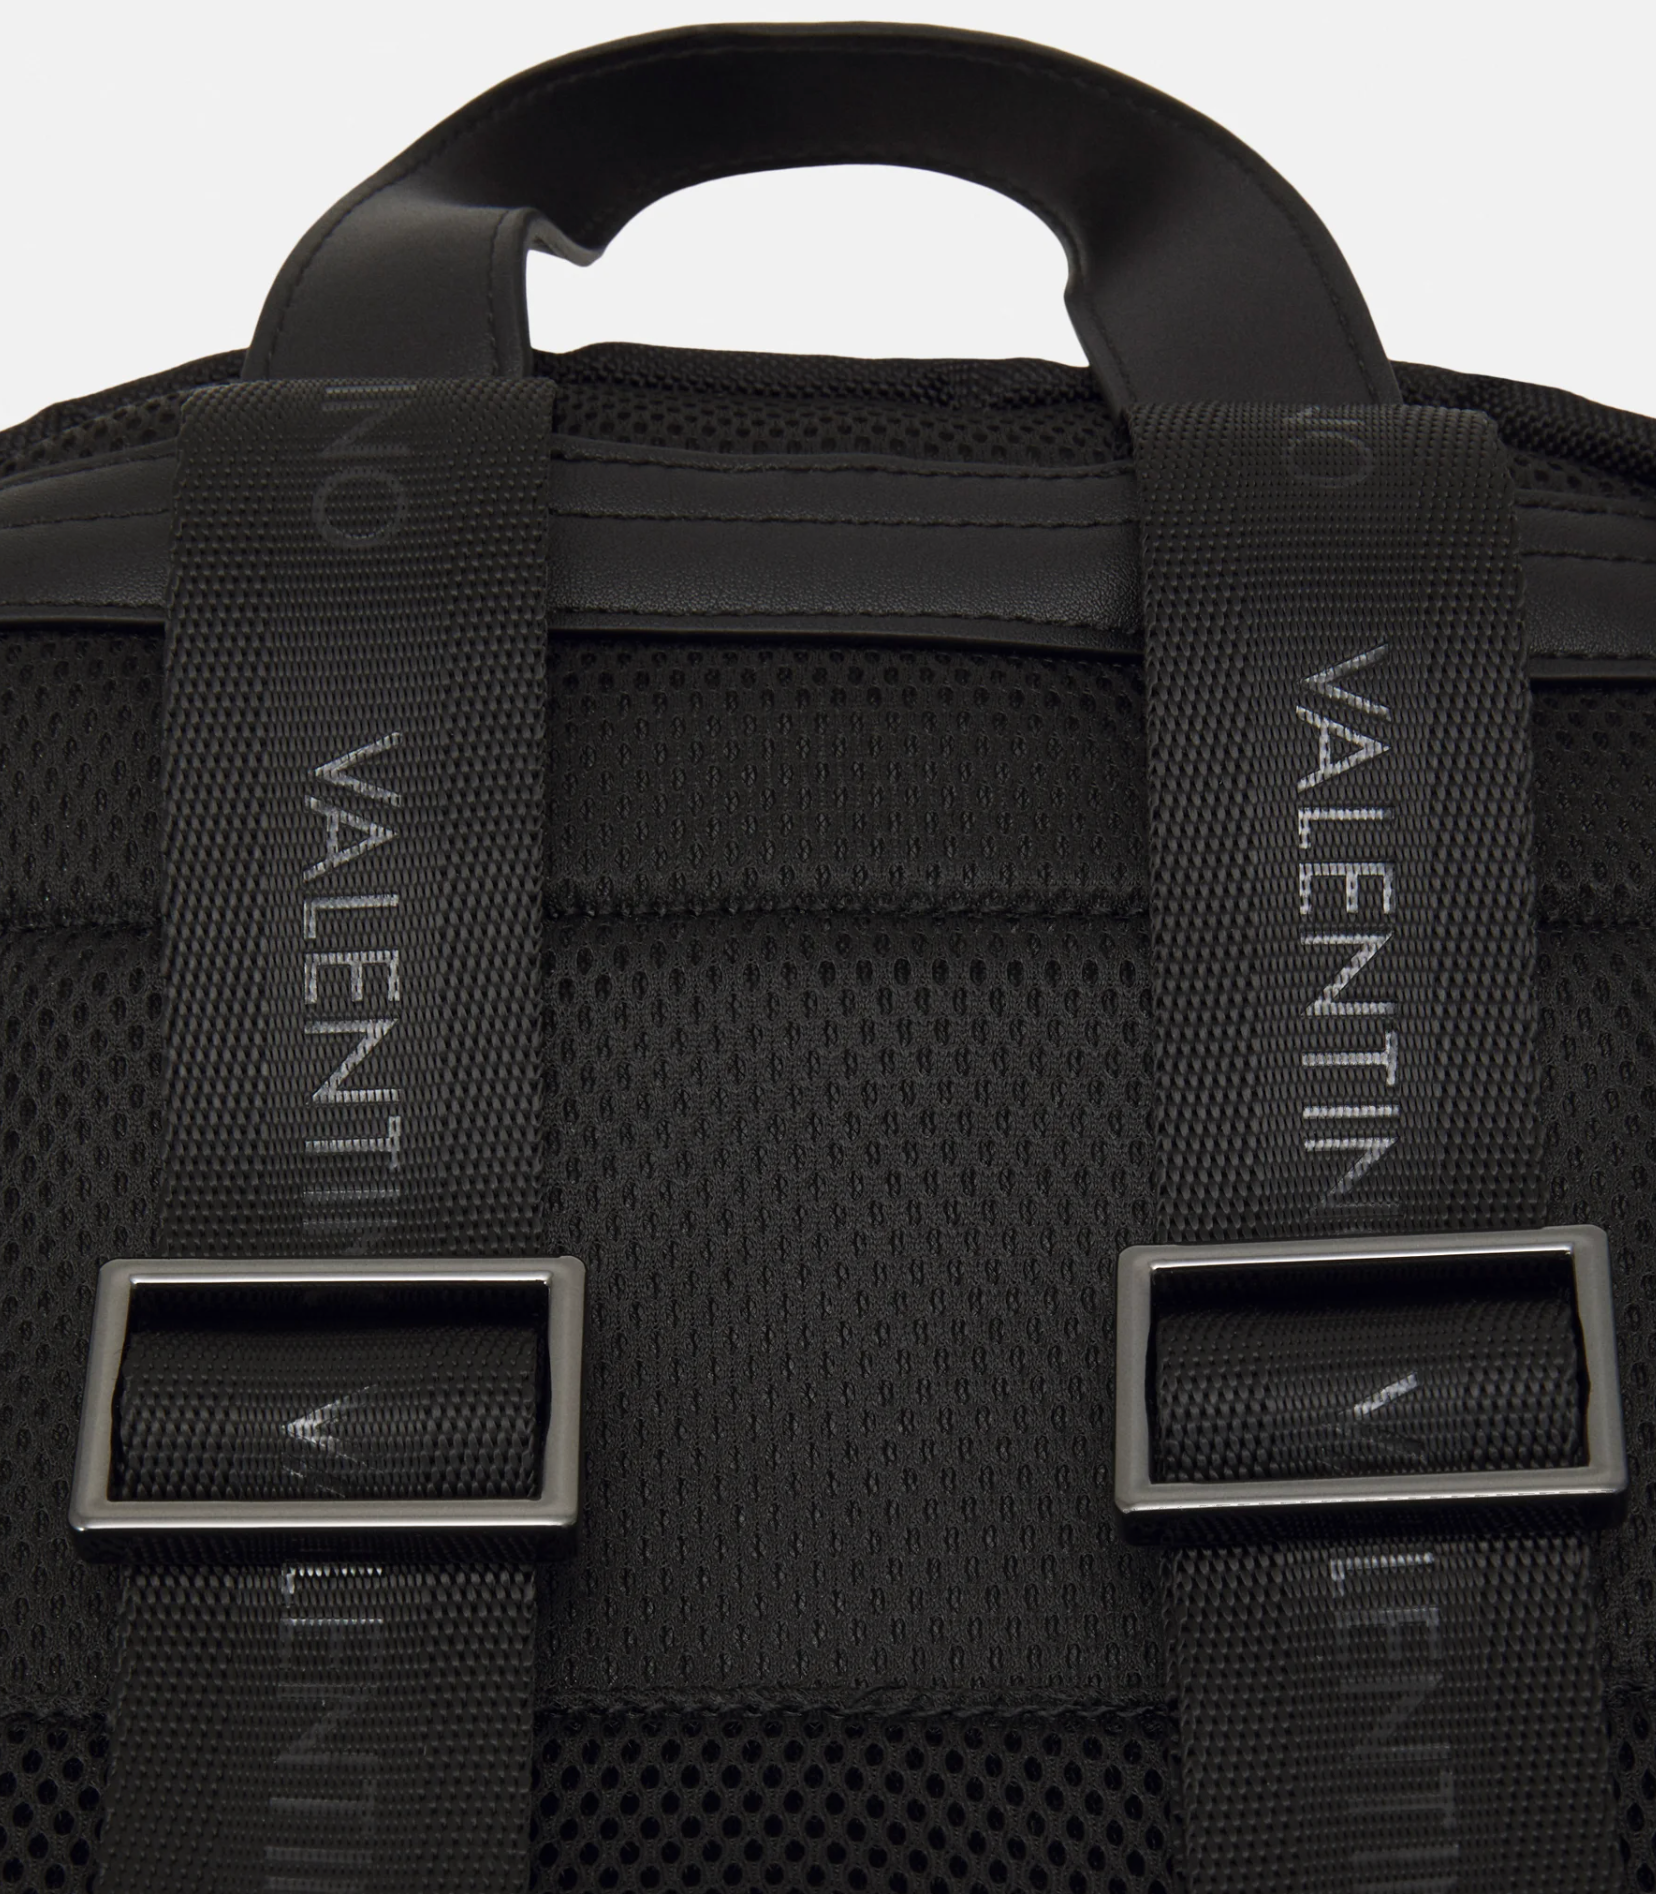 Valentino "ANAKIN" Backpack Black